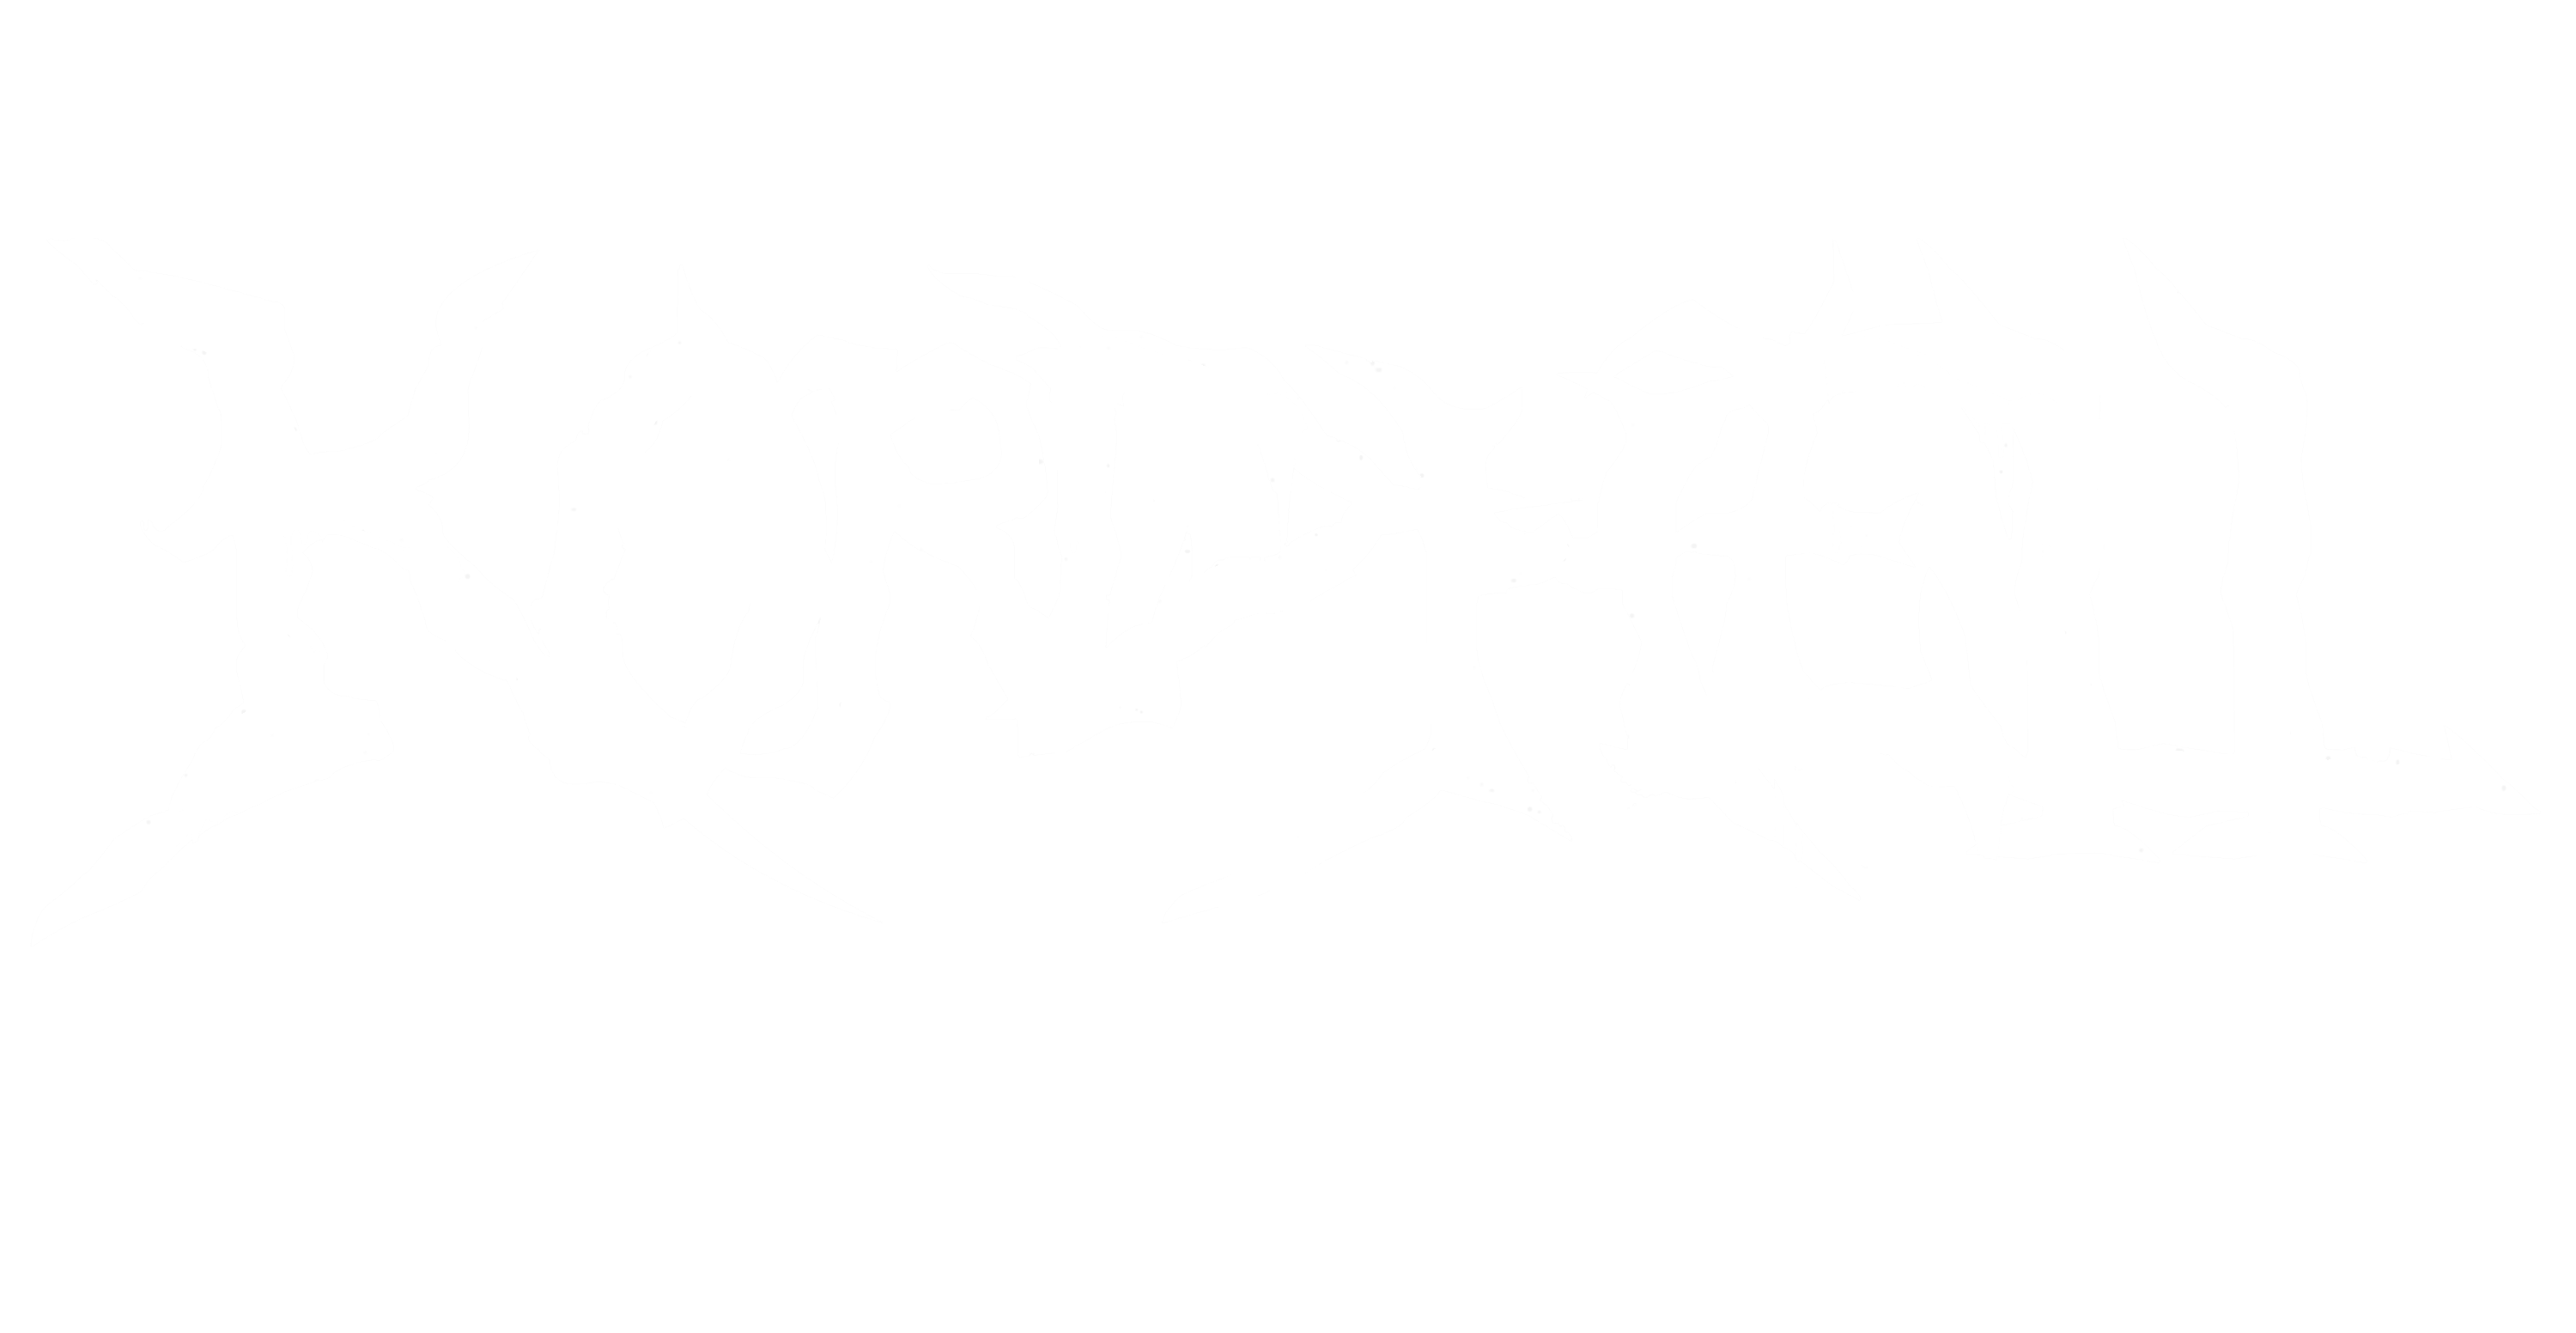 Kordhell [community logo]